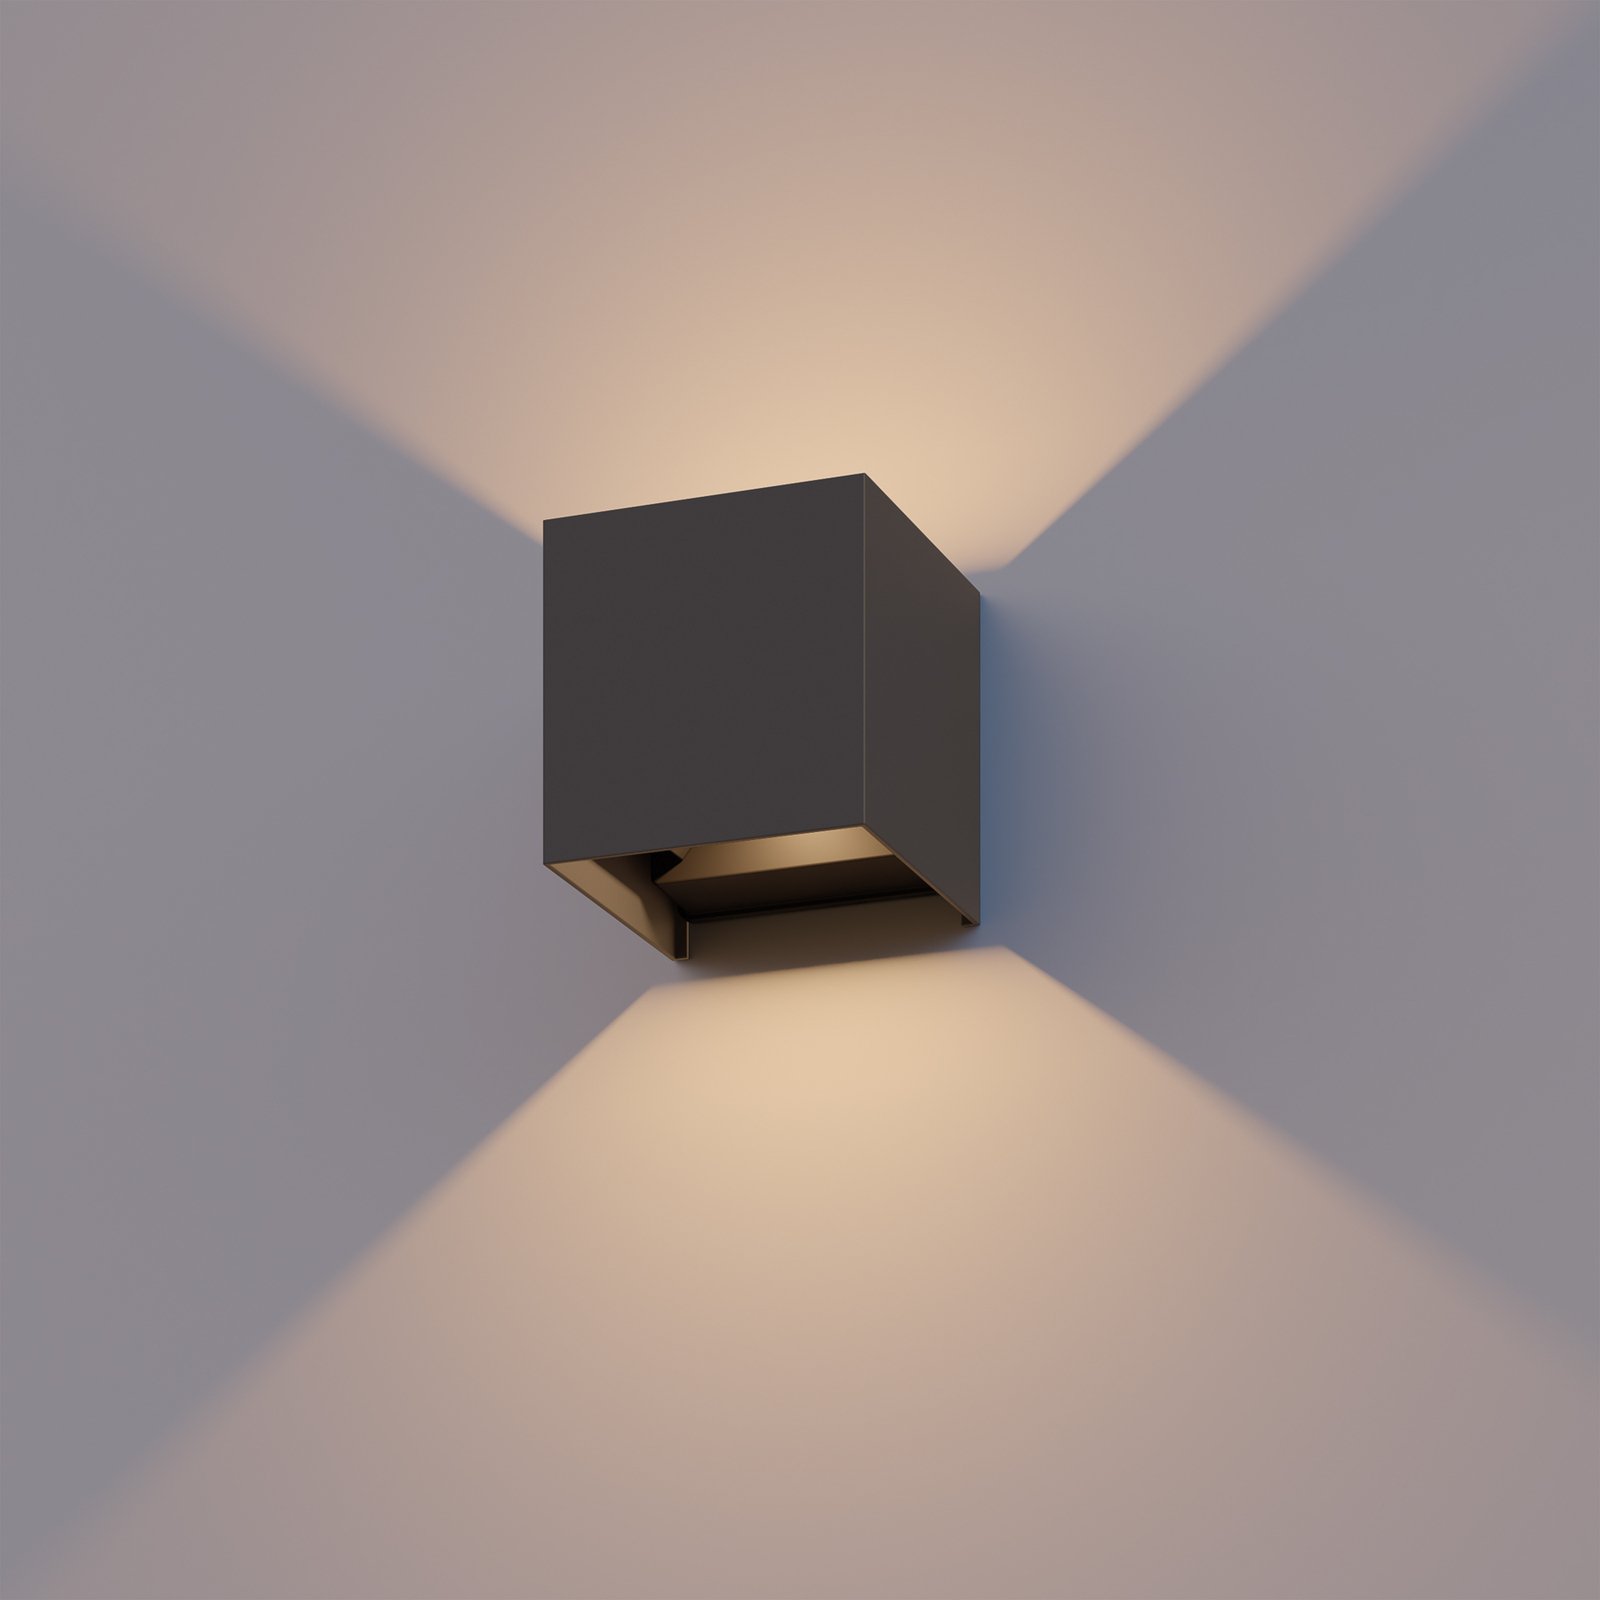 Calex LED-Außenwandlampe Cube, up/down, Höhe 10cm, anthrazit